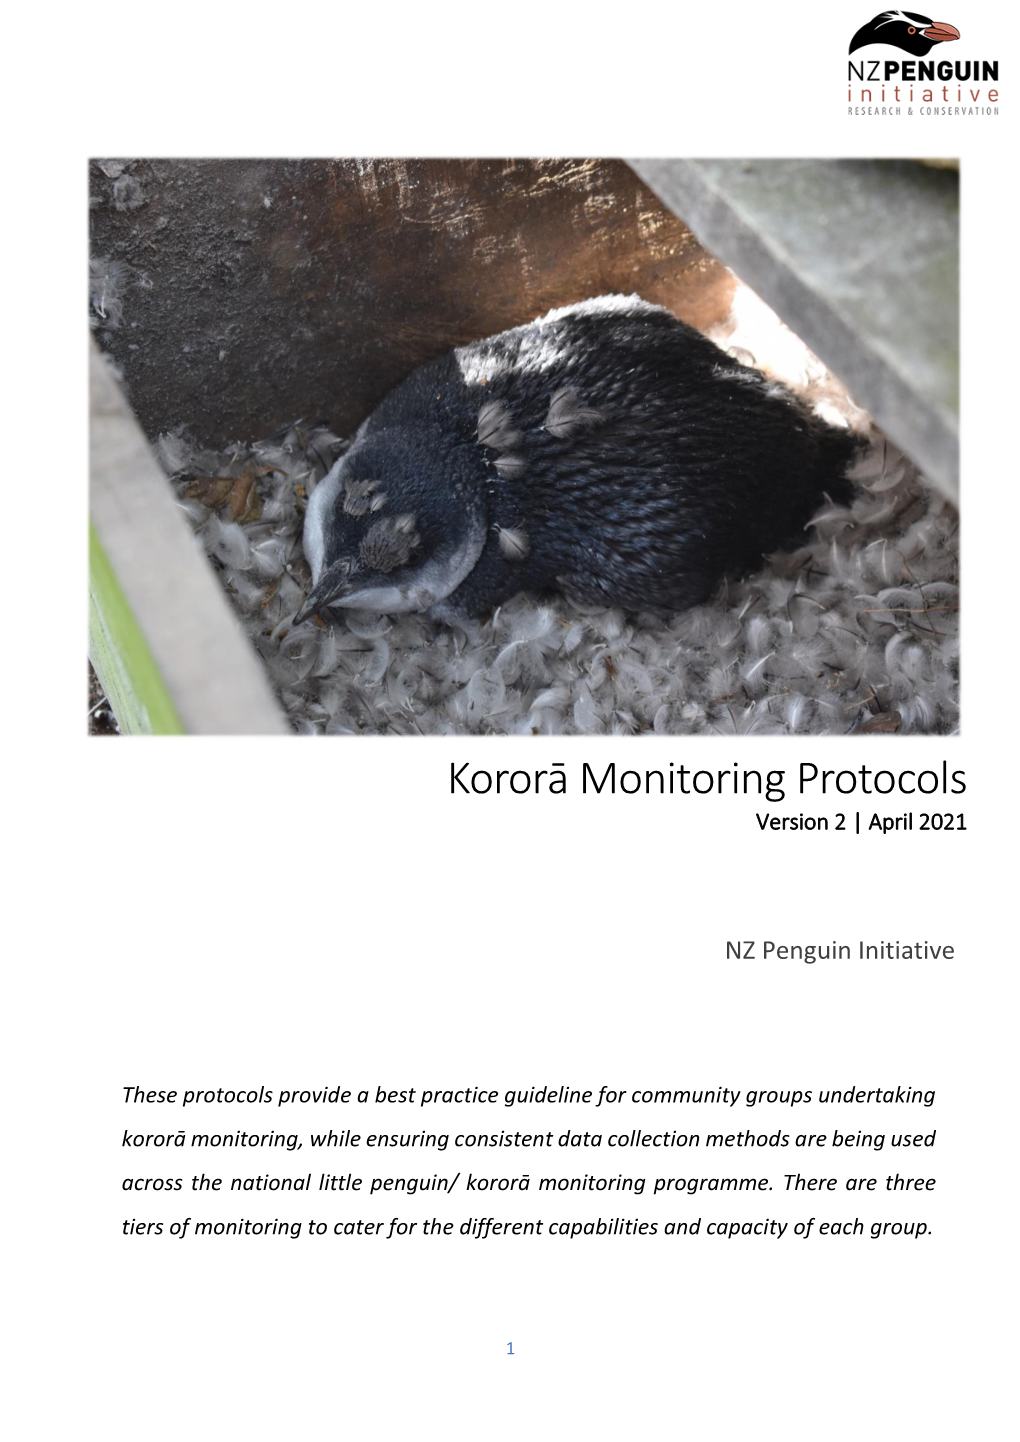 Kororā Monitoring Protocols Version 2 | April 2021